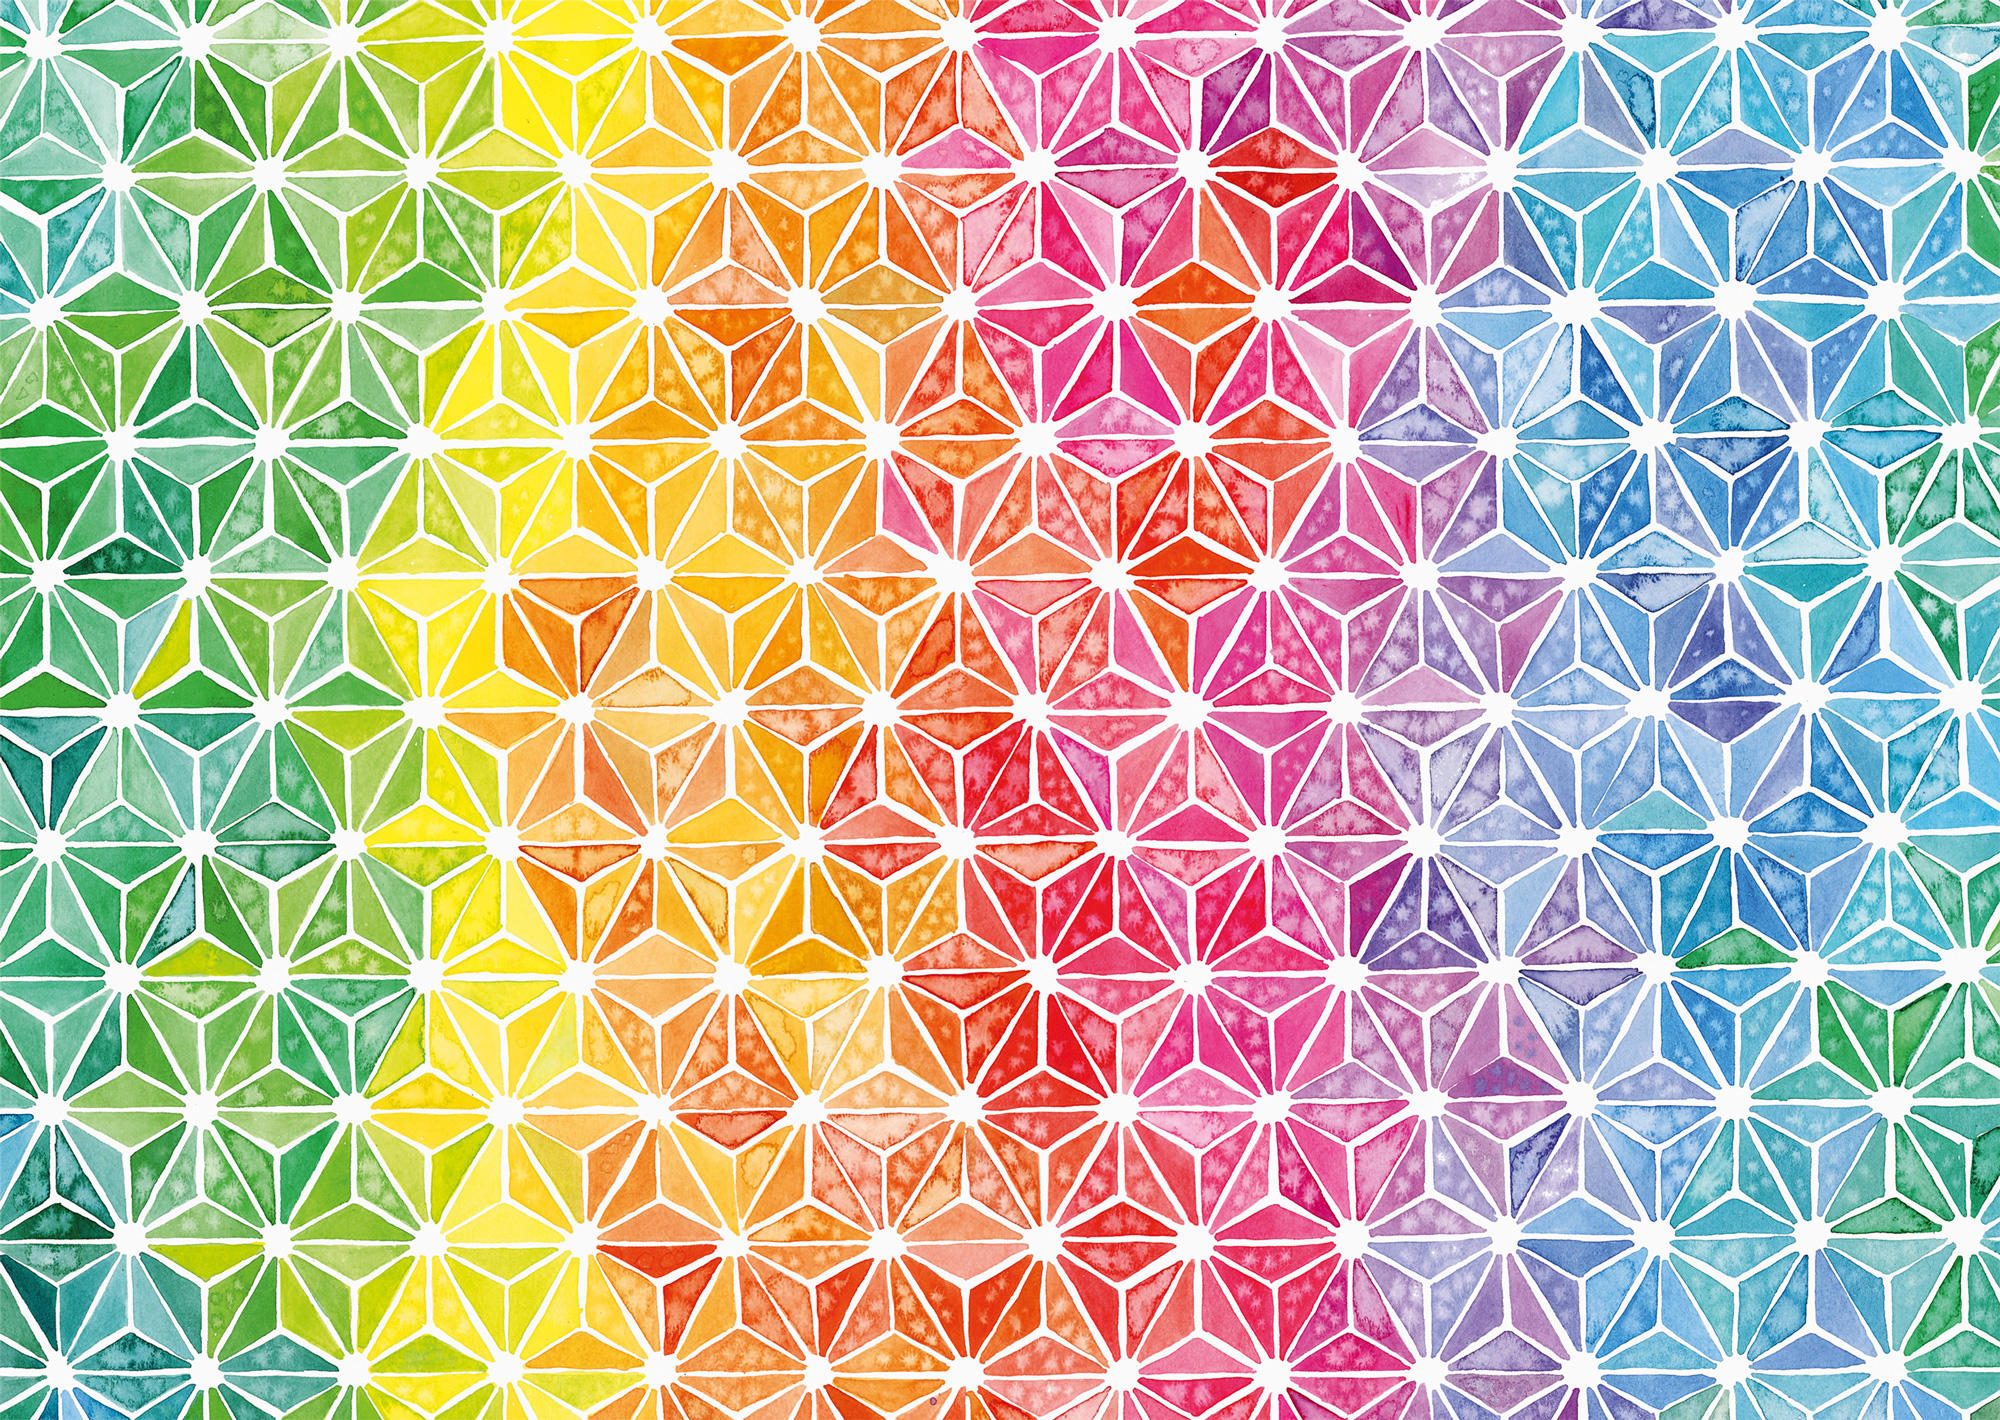 Puzzle Josie Lewis: Colourful triangles